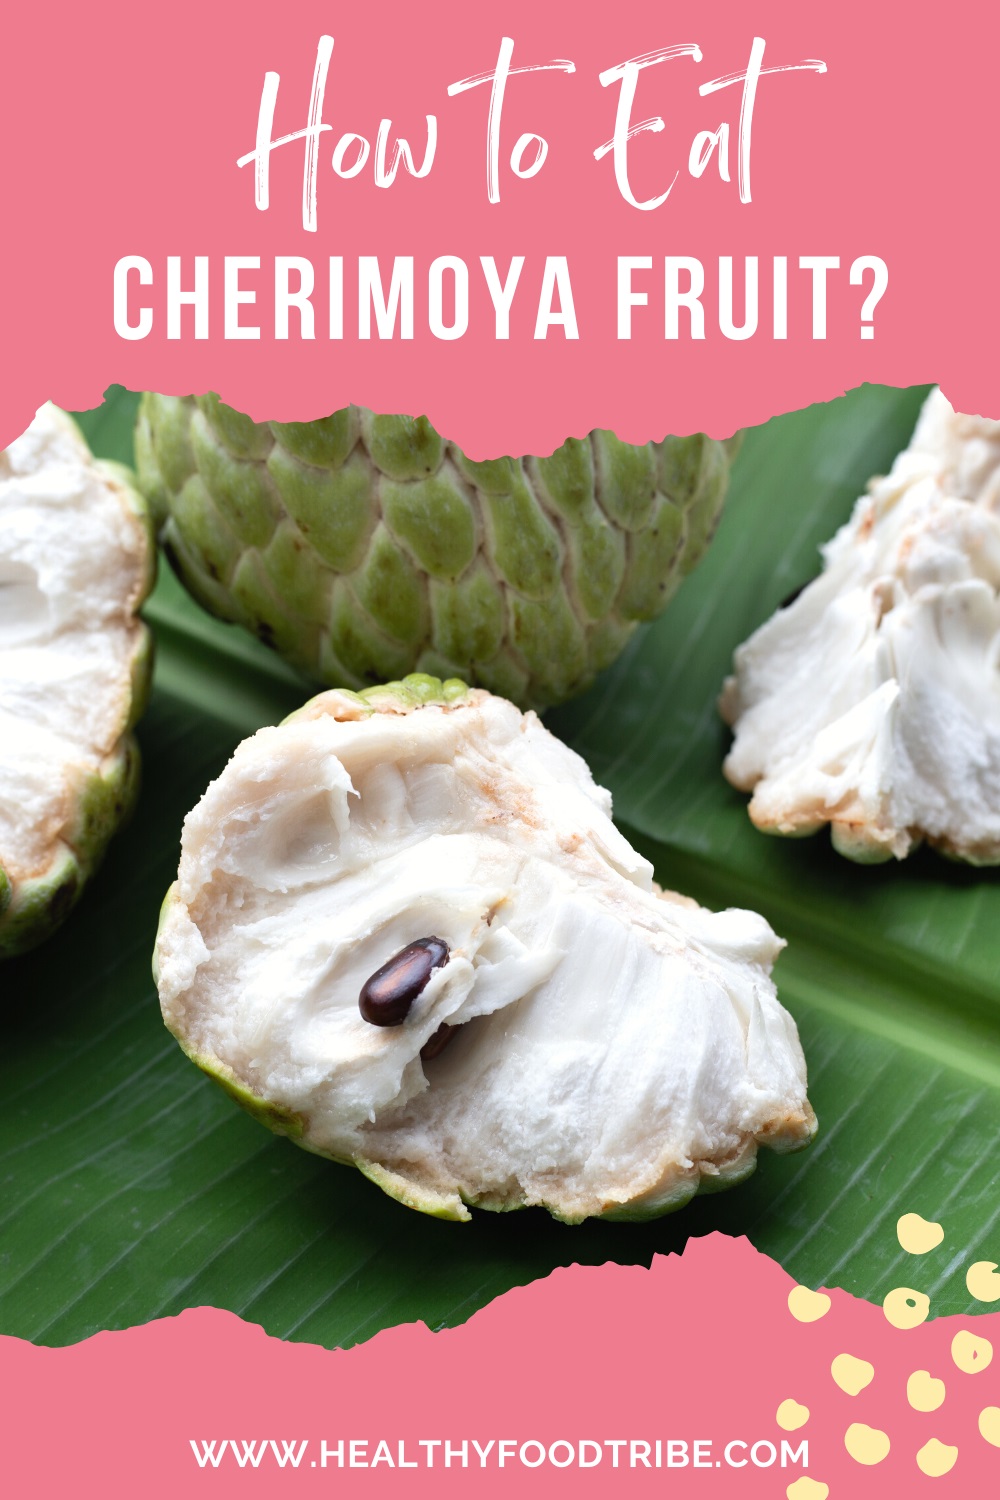 How to eat cherimoya?